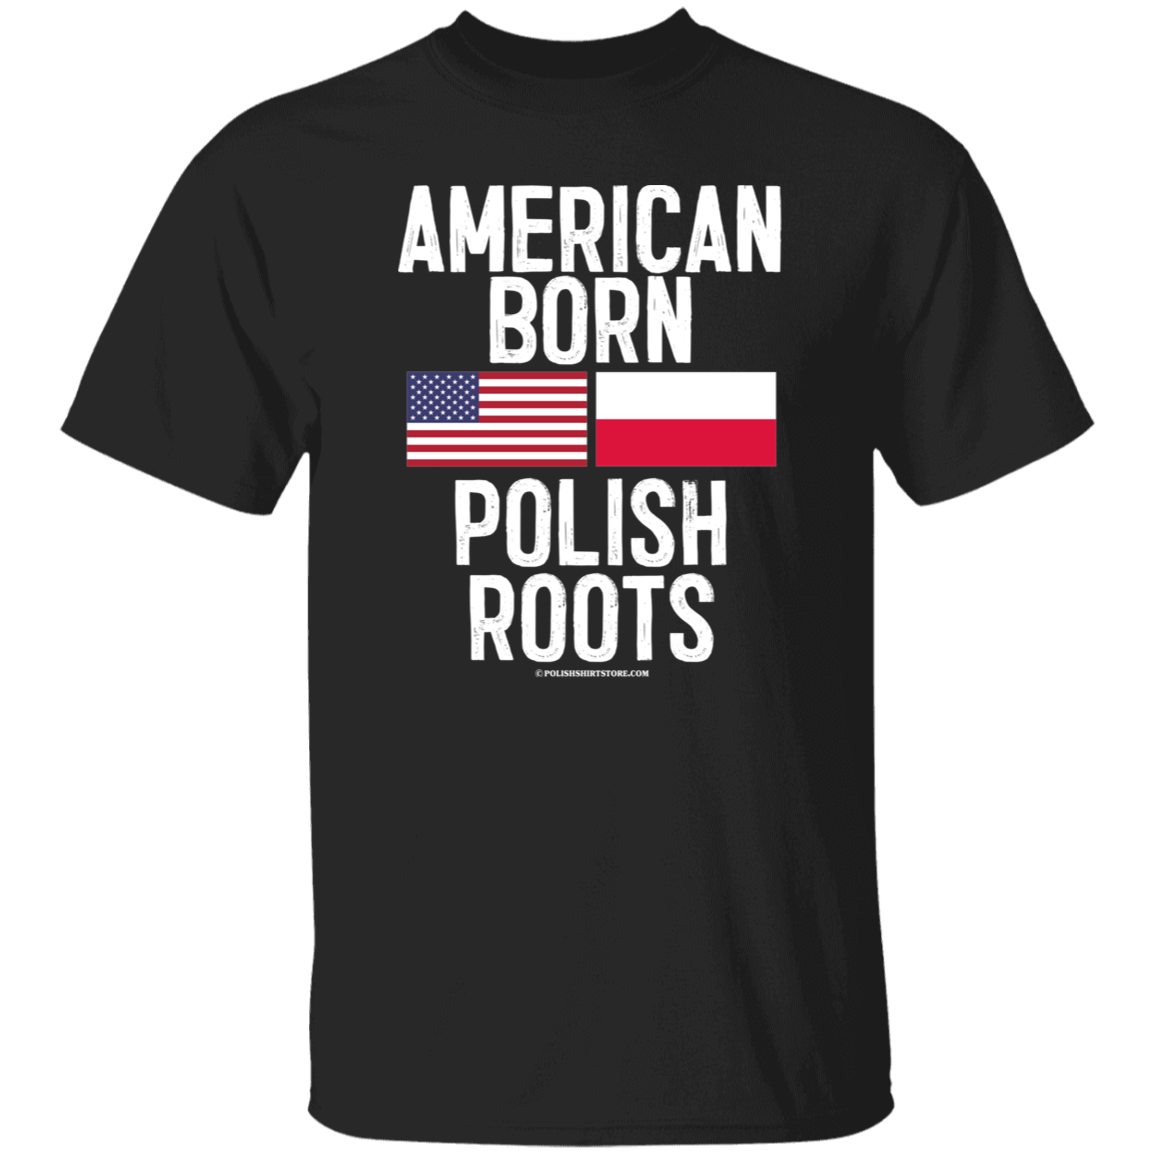 American Born Polish Roots With Flags Apparel CustomCat G500 5.3 oz. T-Shirt Black S